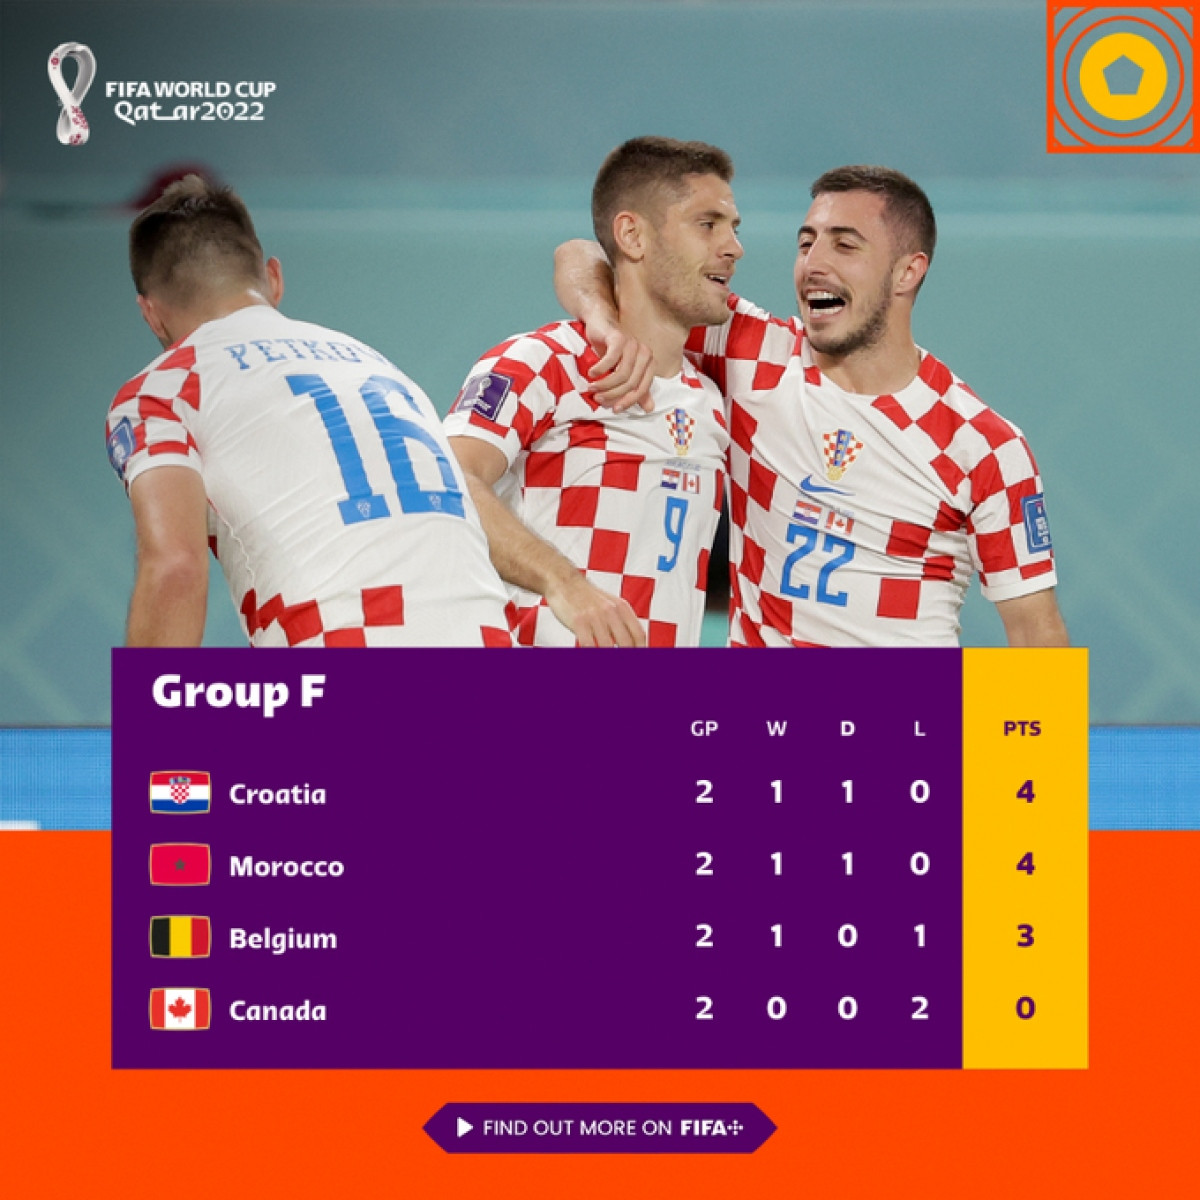 croatia va bi phai quyet tu de tranh ve di tiep tai world cup 2022 hinh anh 1